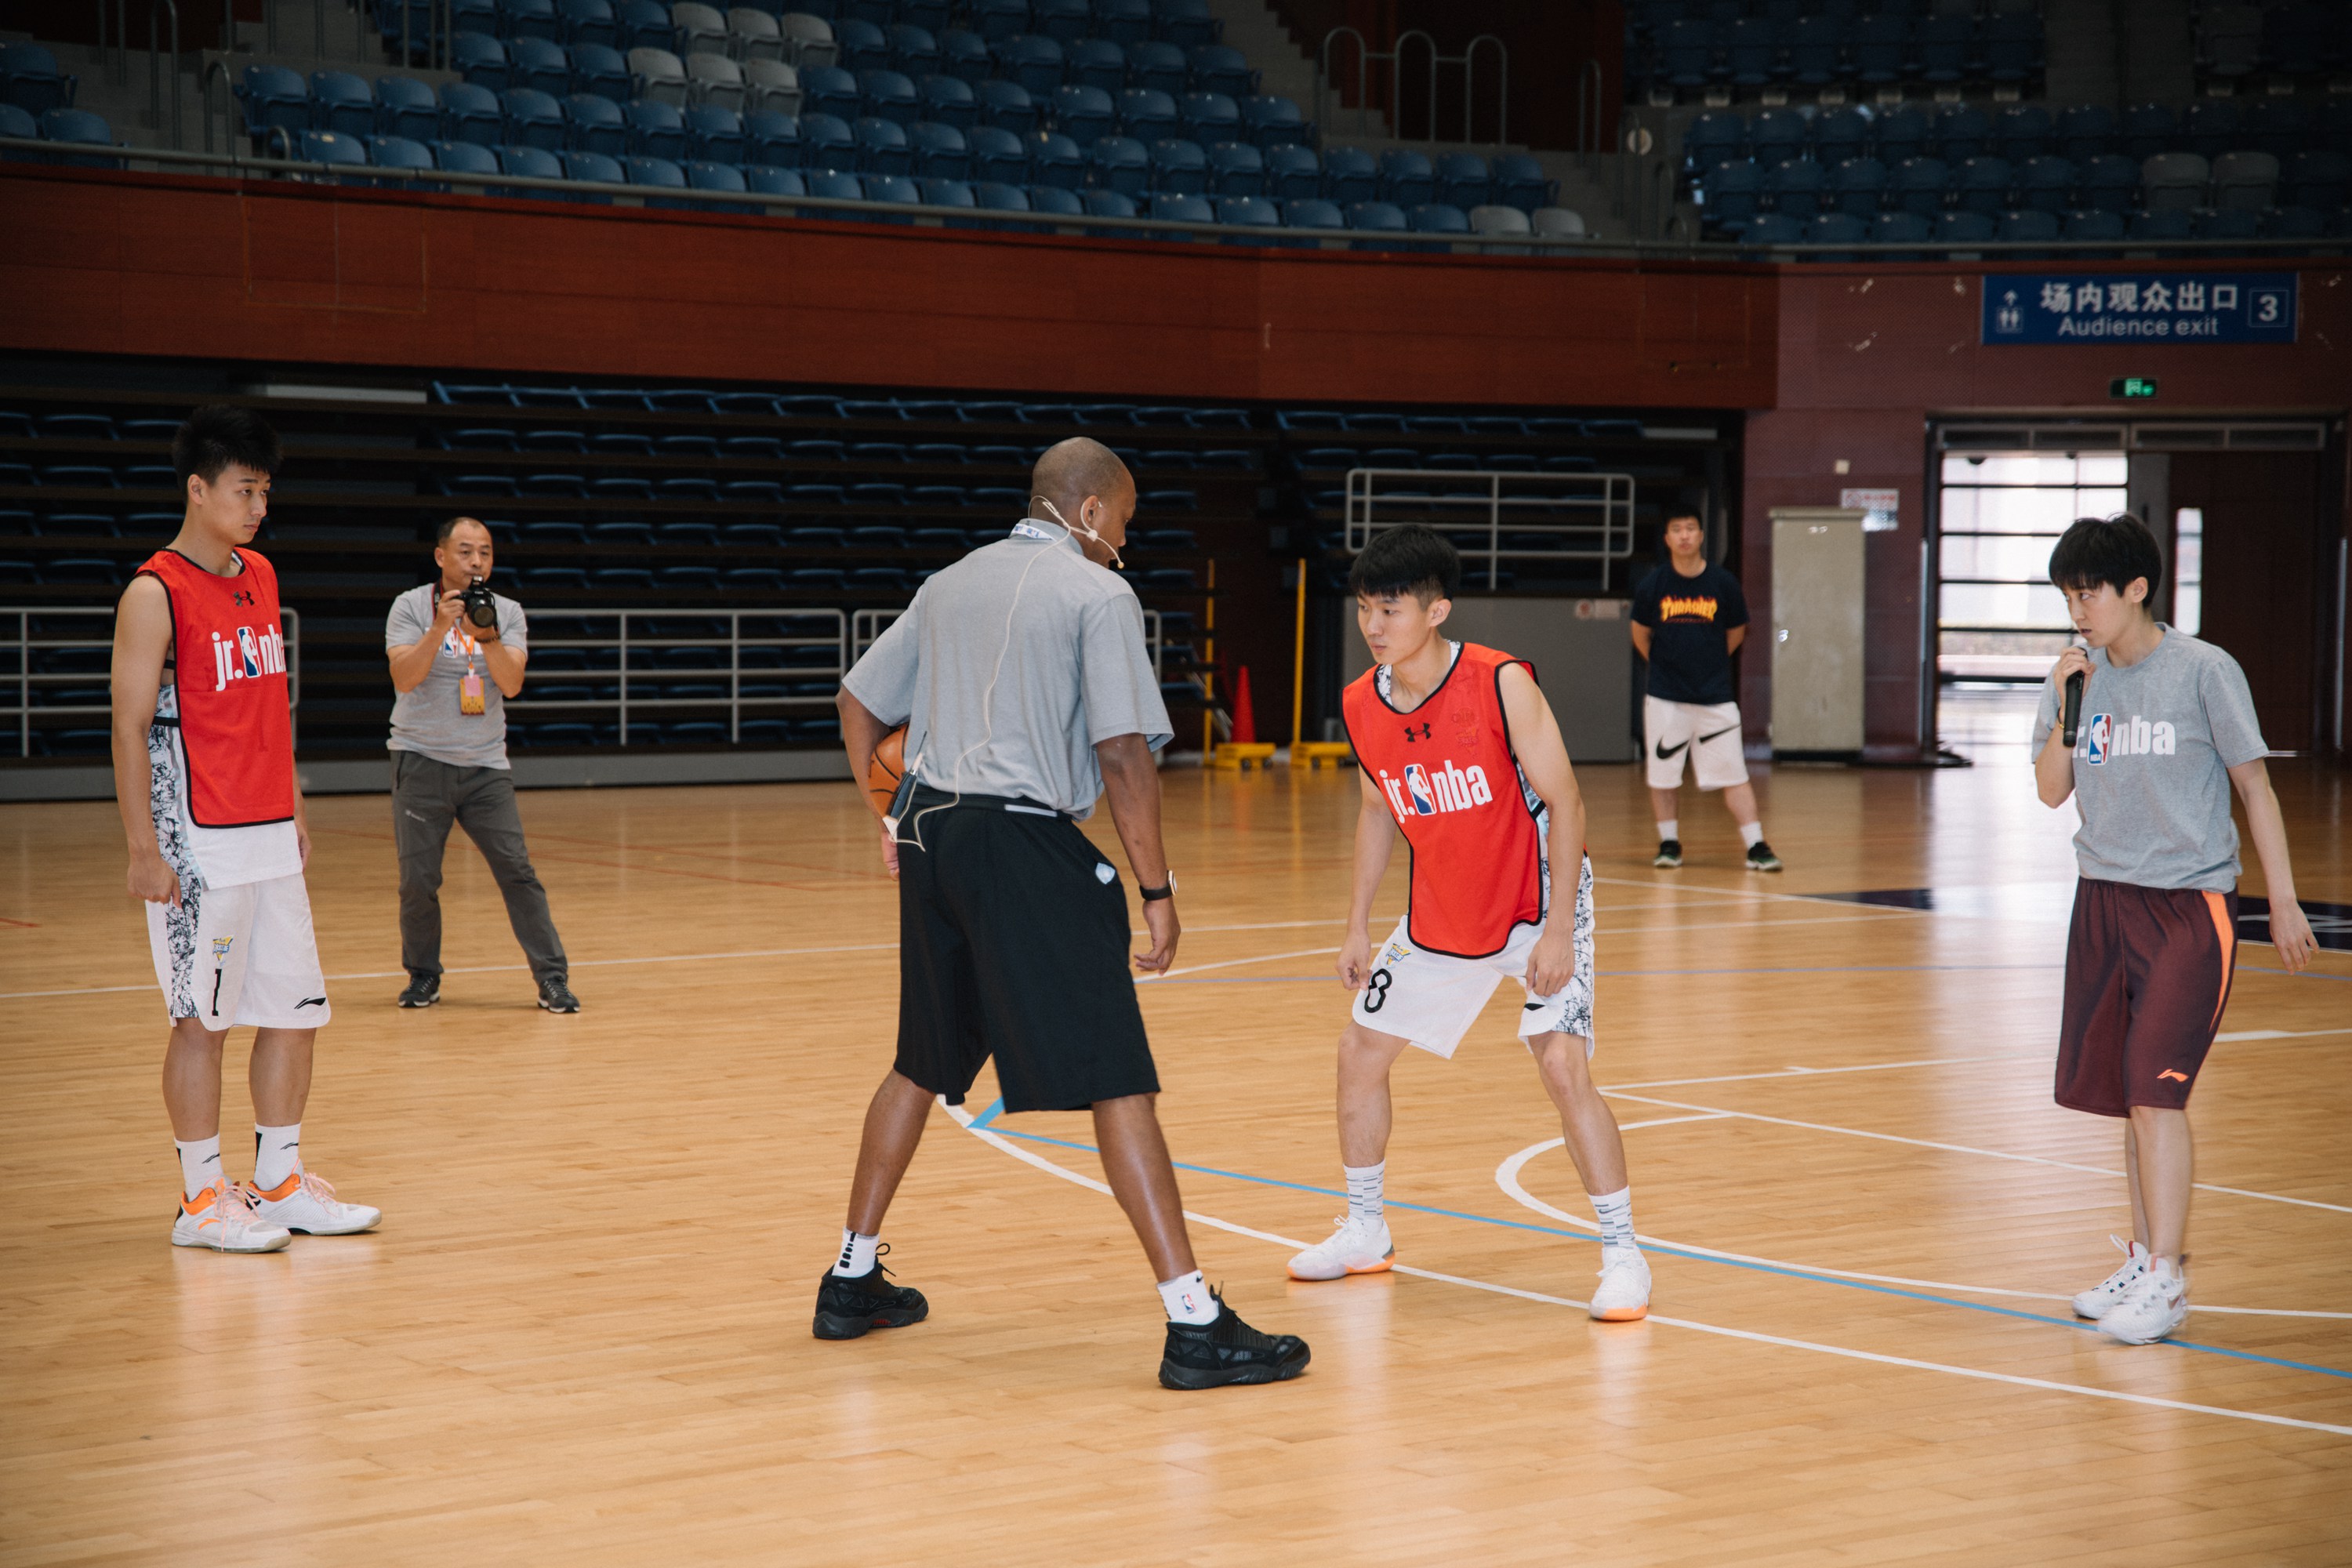 2018fuscnba校园篮球教练员培训班在浙江大学开班